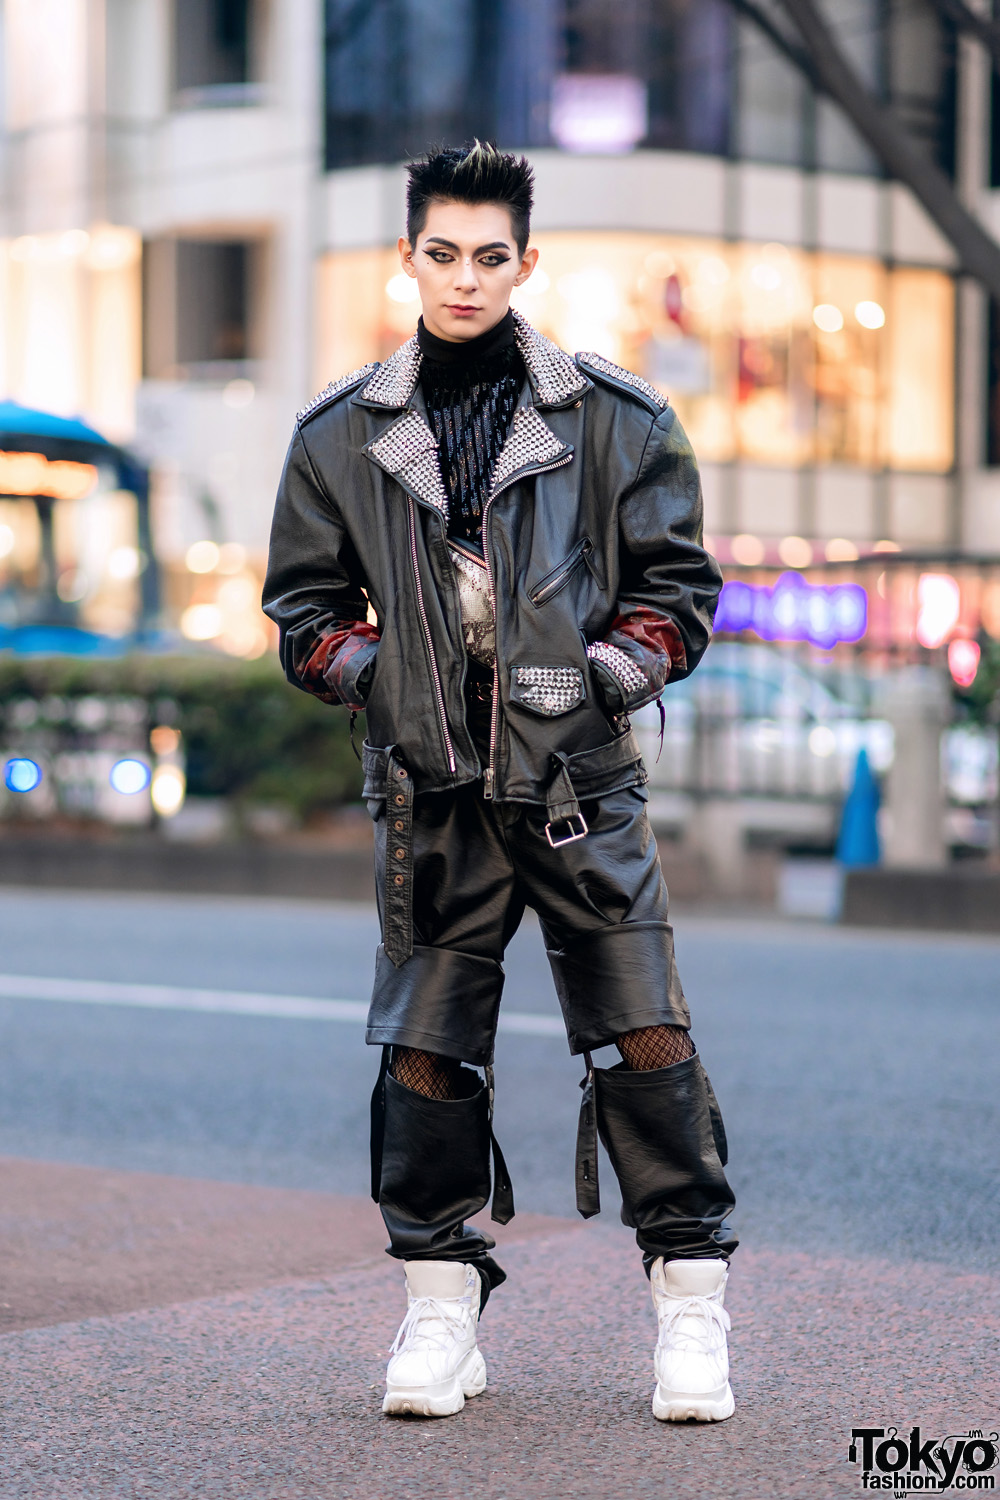 Leather Harajuku Street Style w/ Spiked Motorcycle Jacket, Gallerie Tokyo Sequin Top, MYOB Cutout Pants & Snakeskin Bag